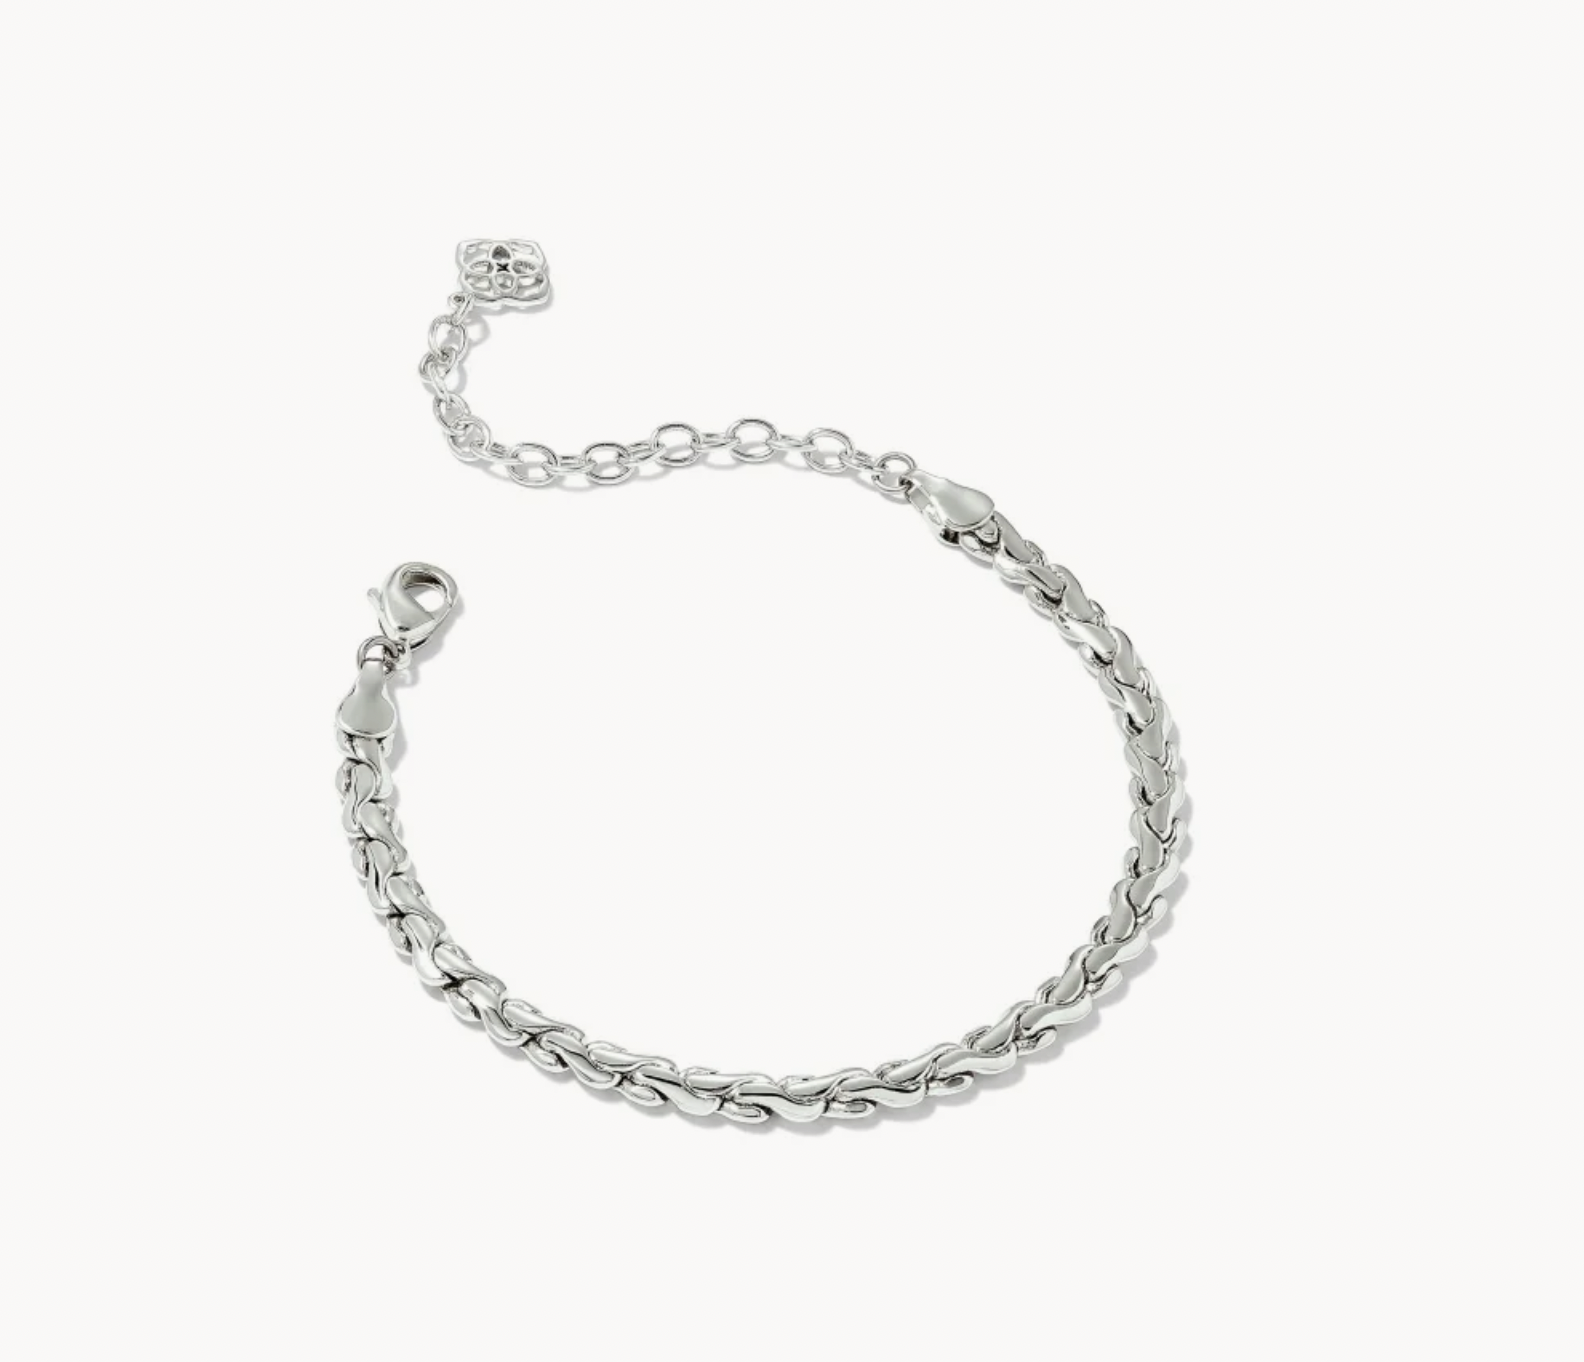 Brielle Rhod Chain Bracelet